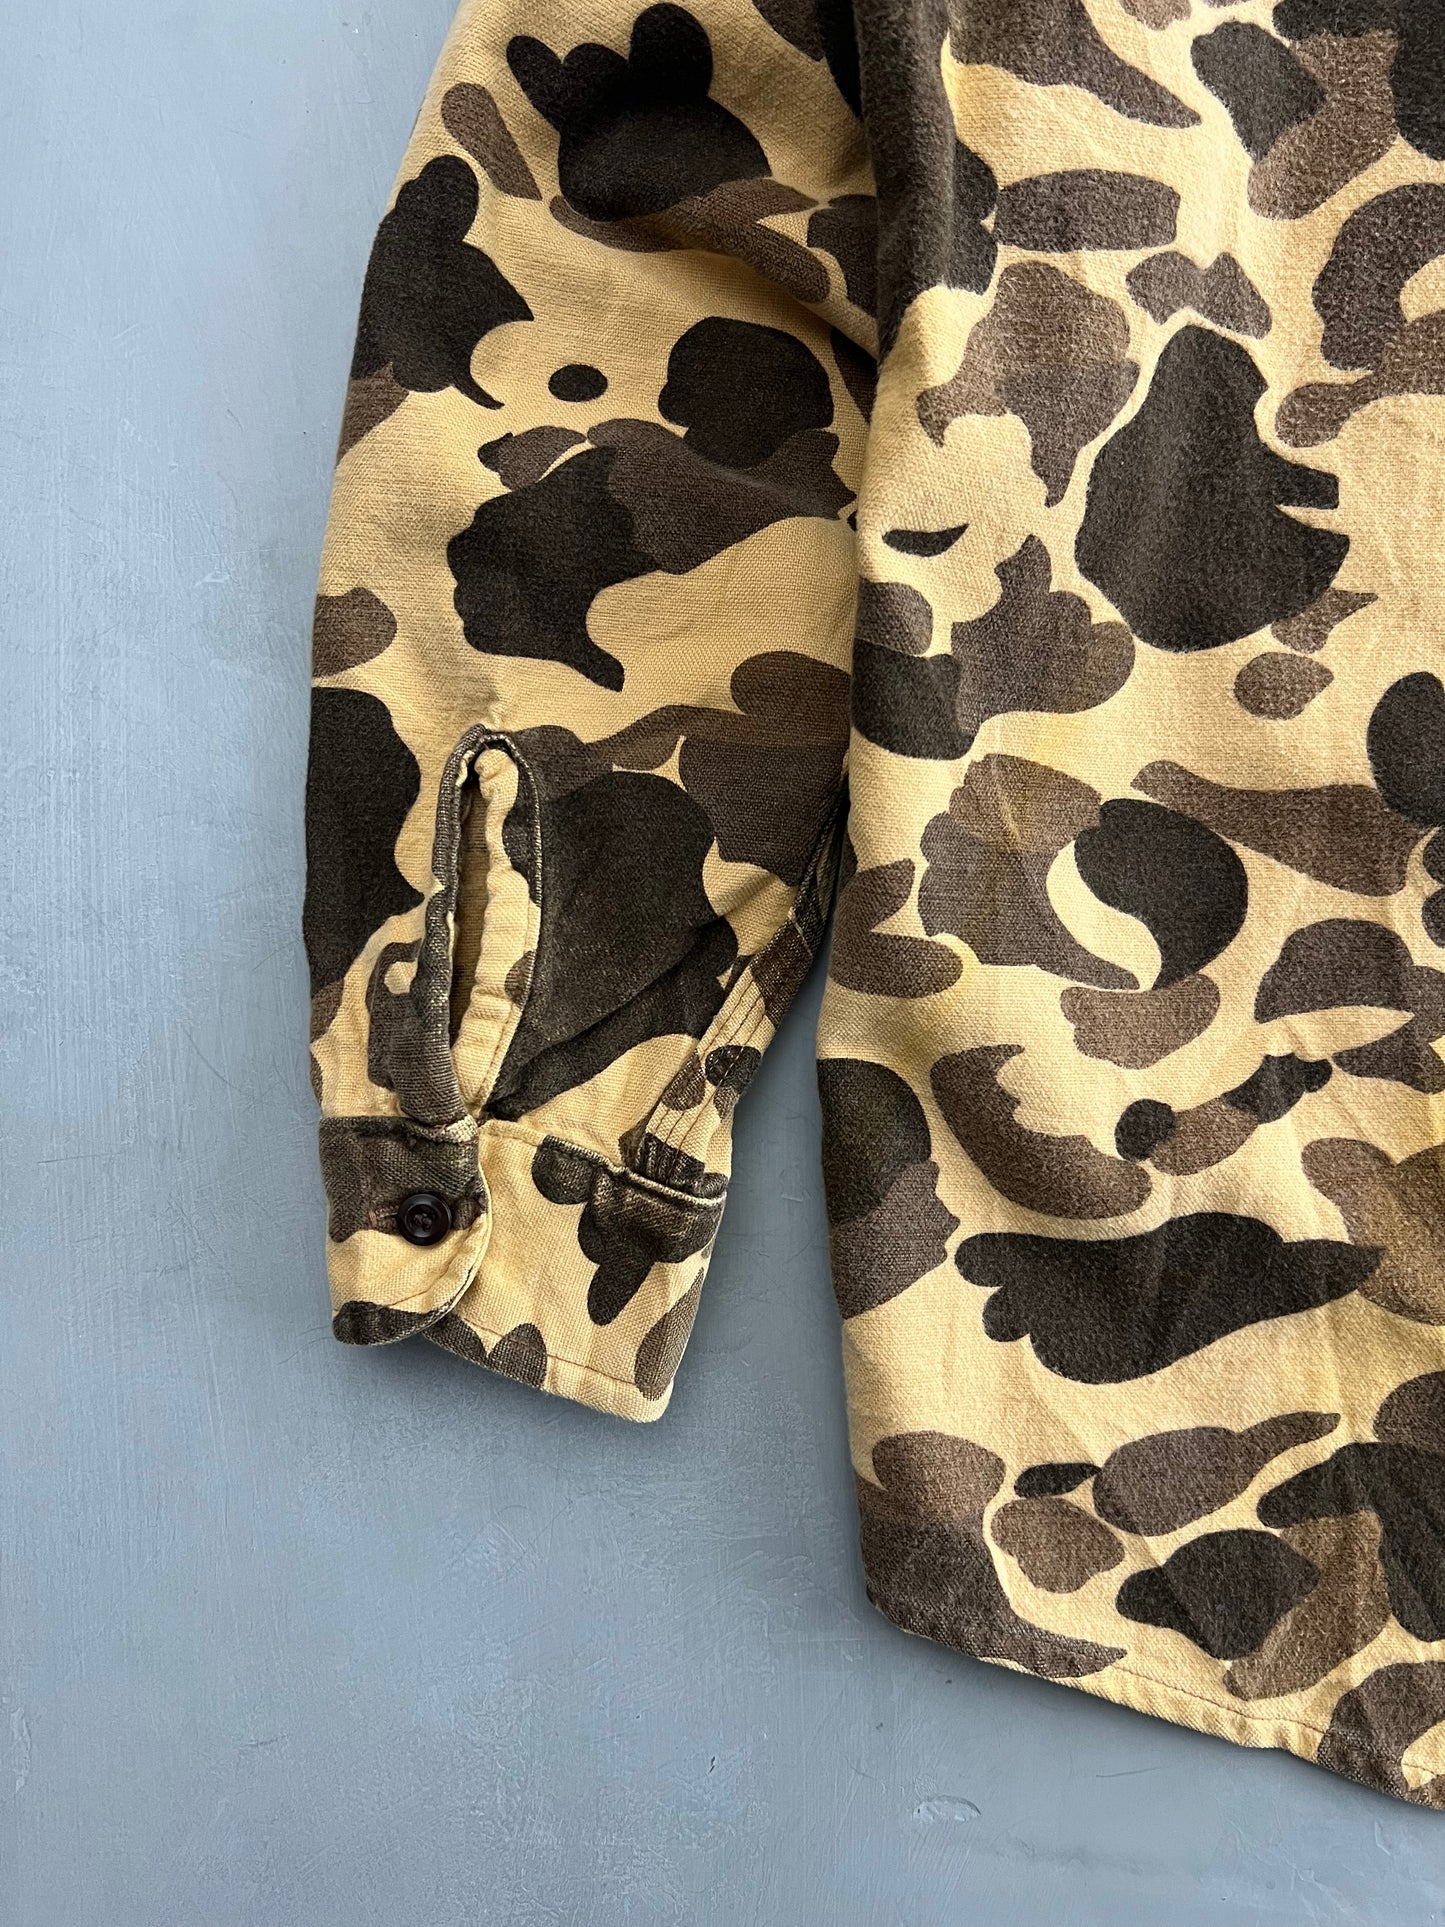 Flannel Hunting Shirt [XL]